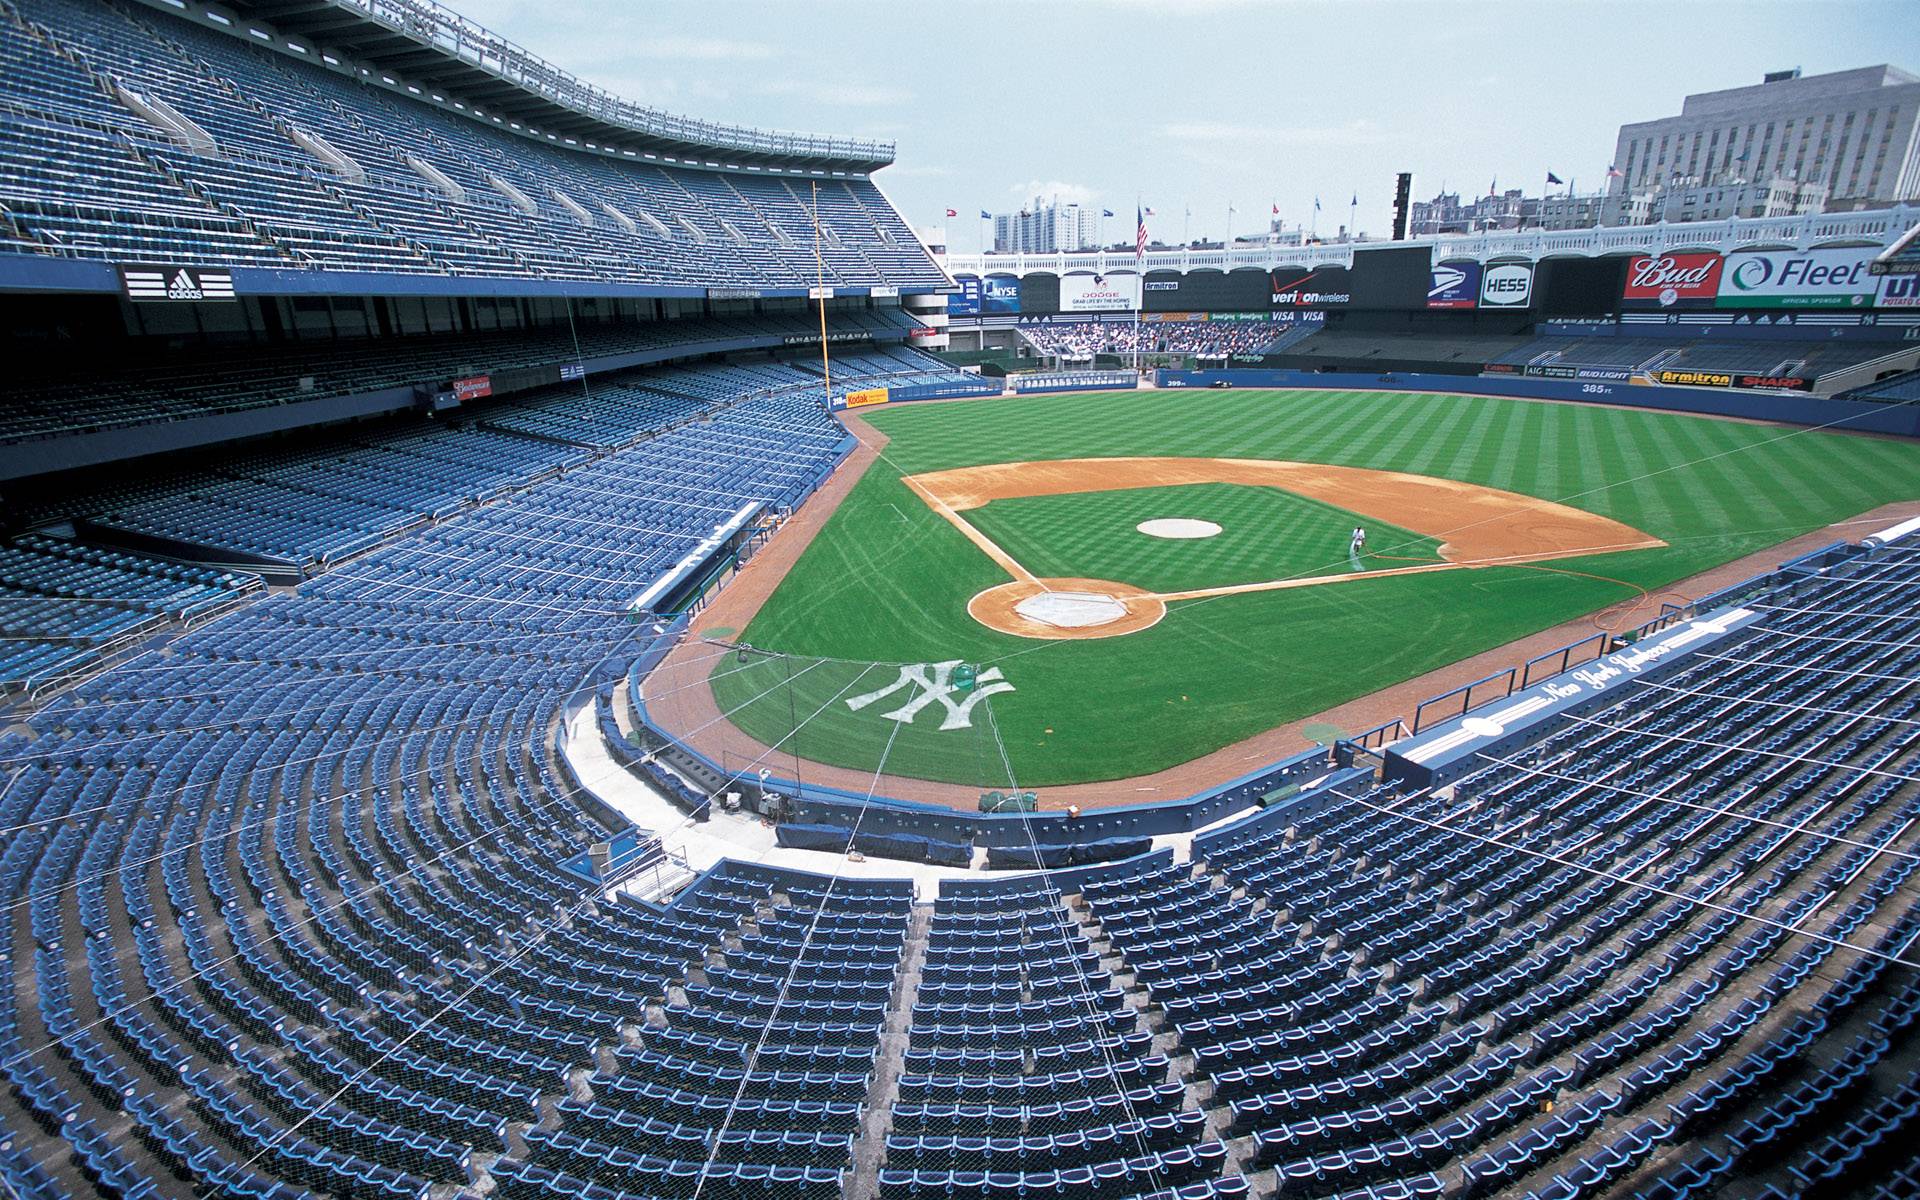 Baseball Stadium / New York / USA wallpaper and image